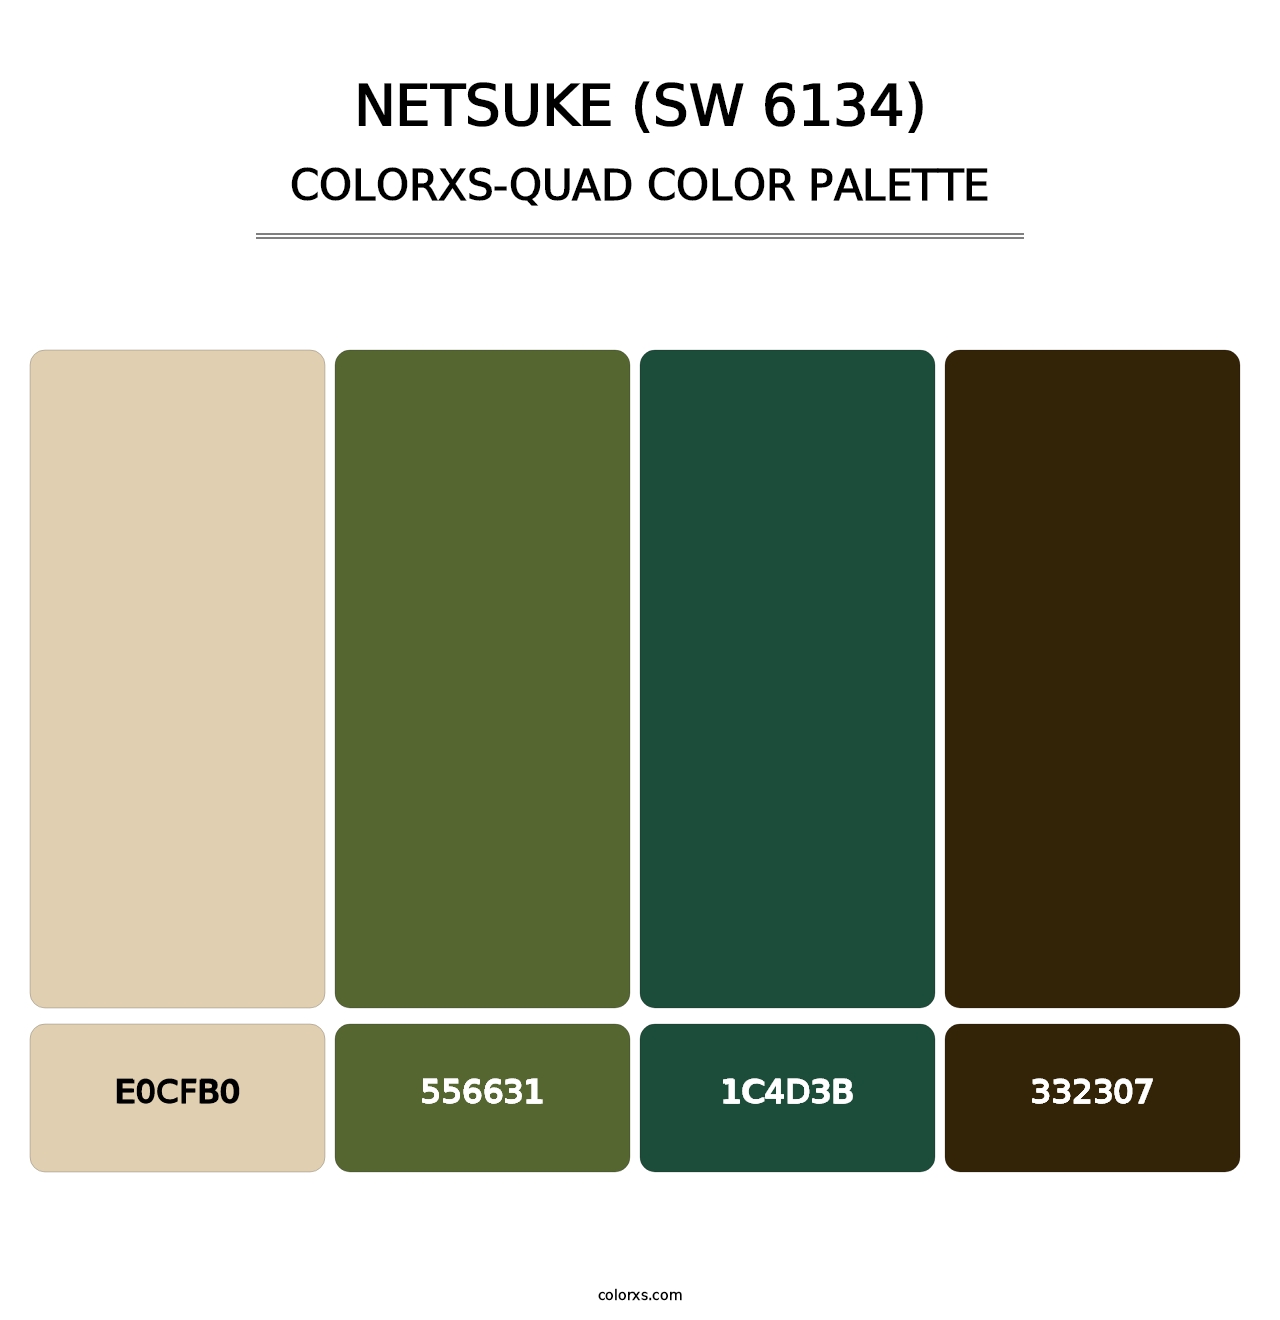 Netsuke (SW 6134) - Colorxs Quad Palette